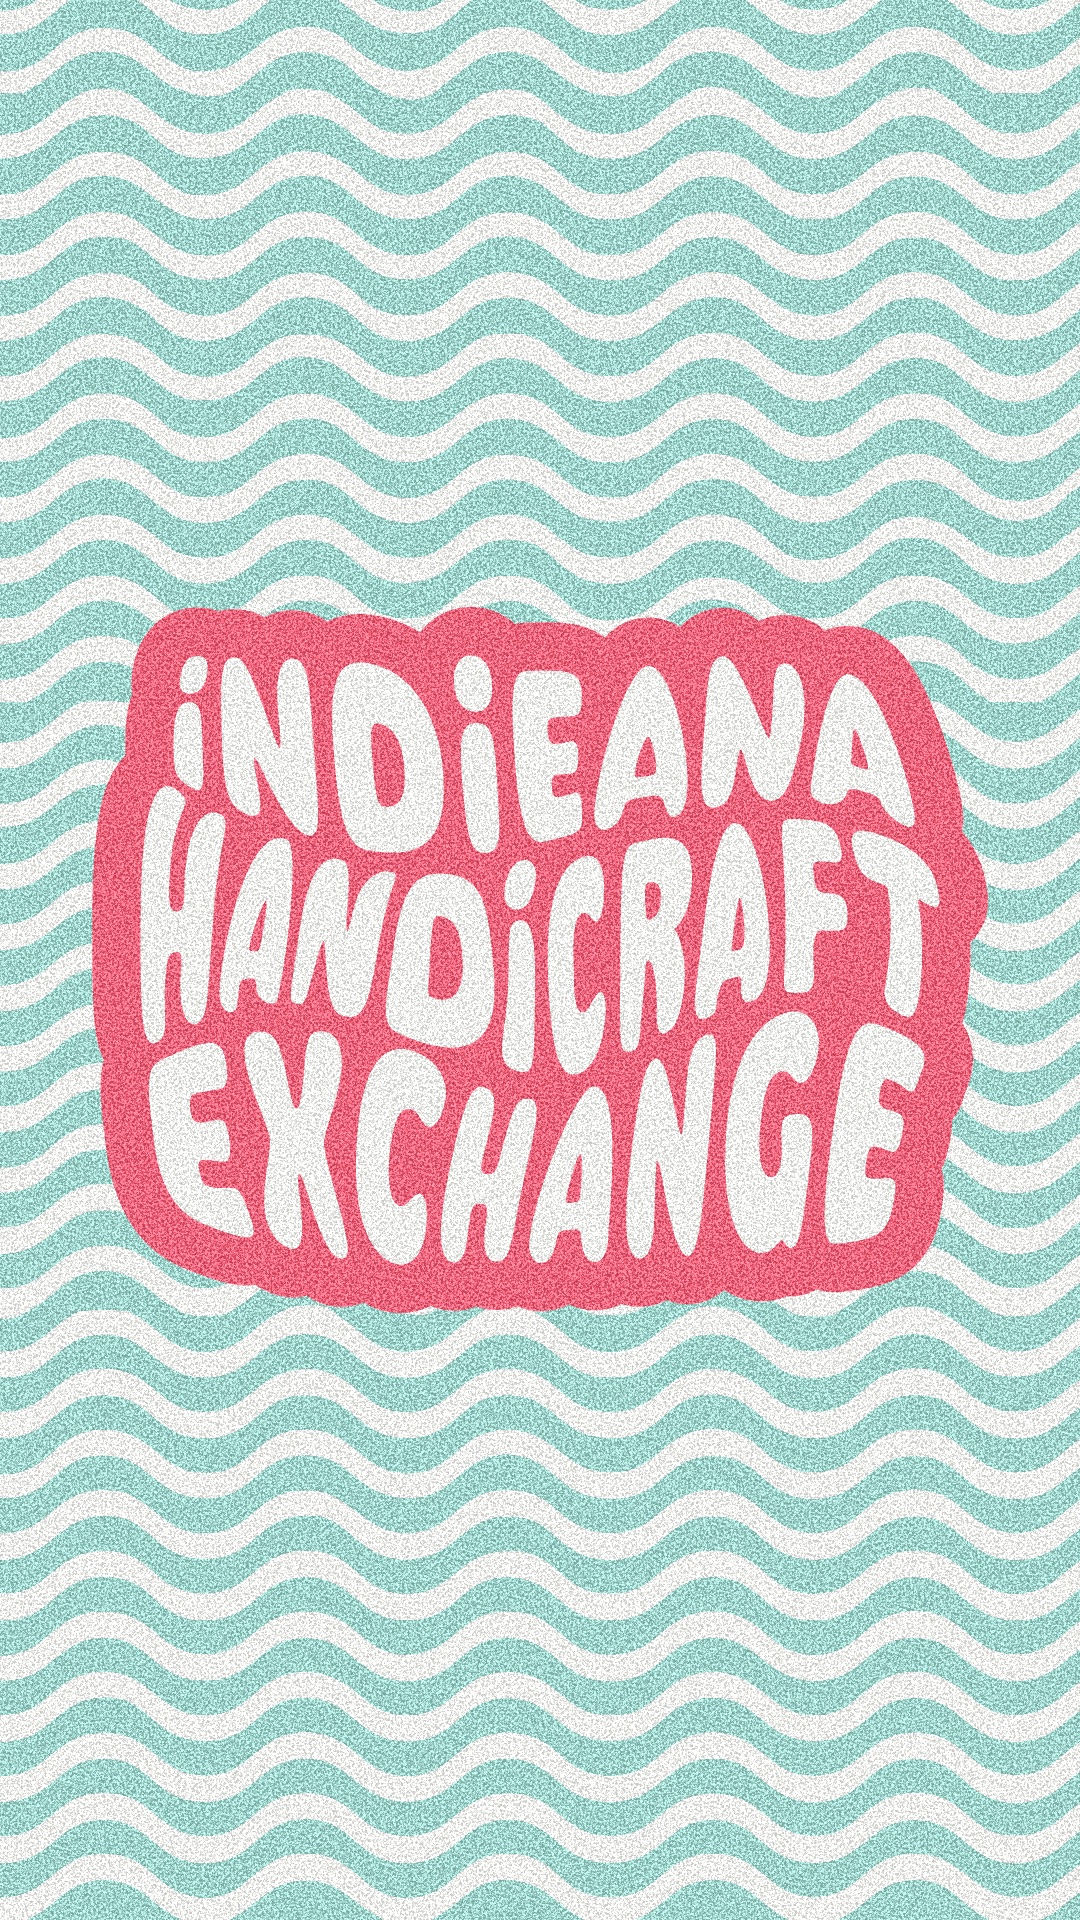 INDIEana Handicraft Exchange cover image